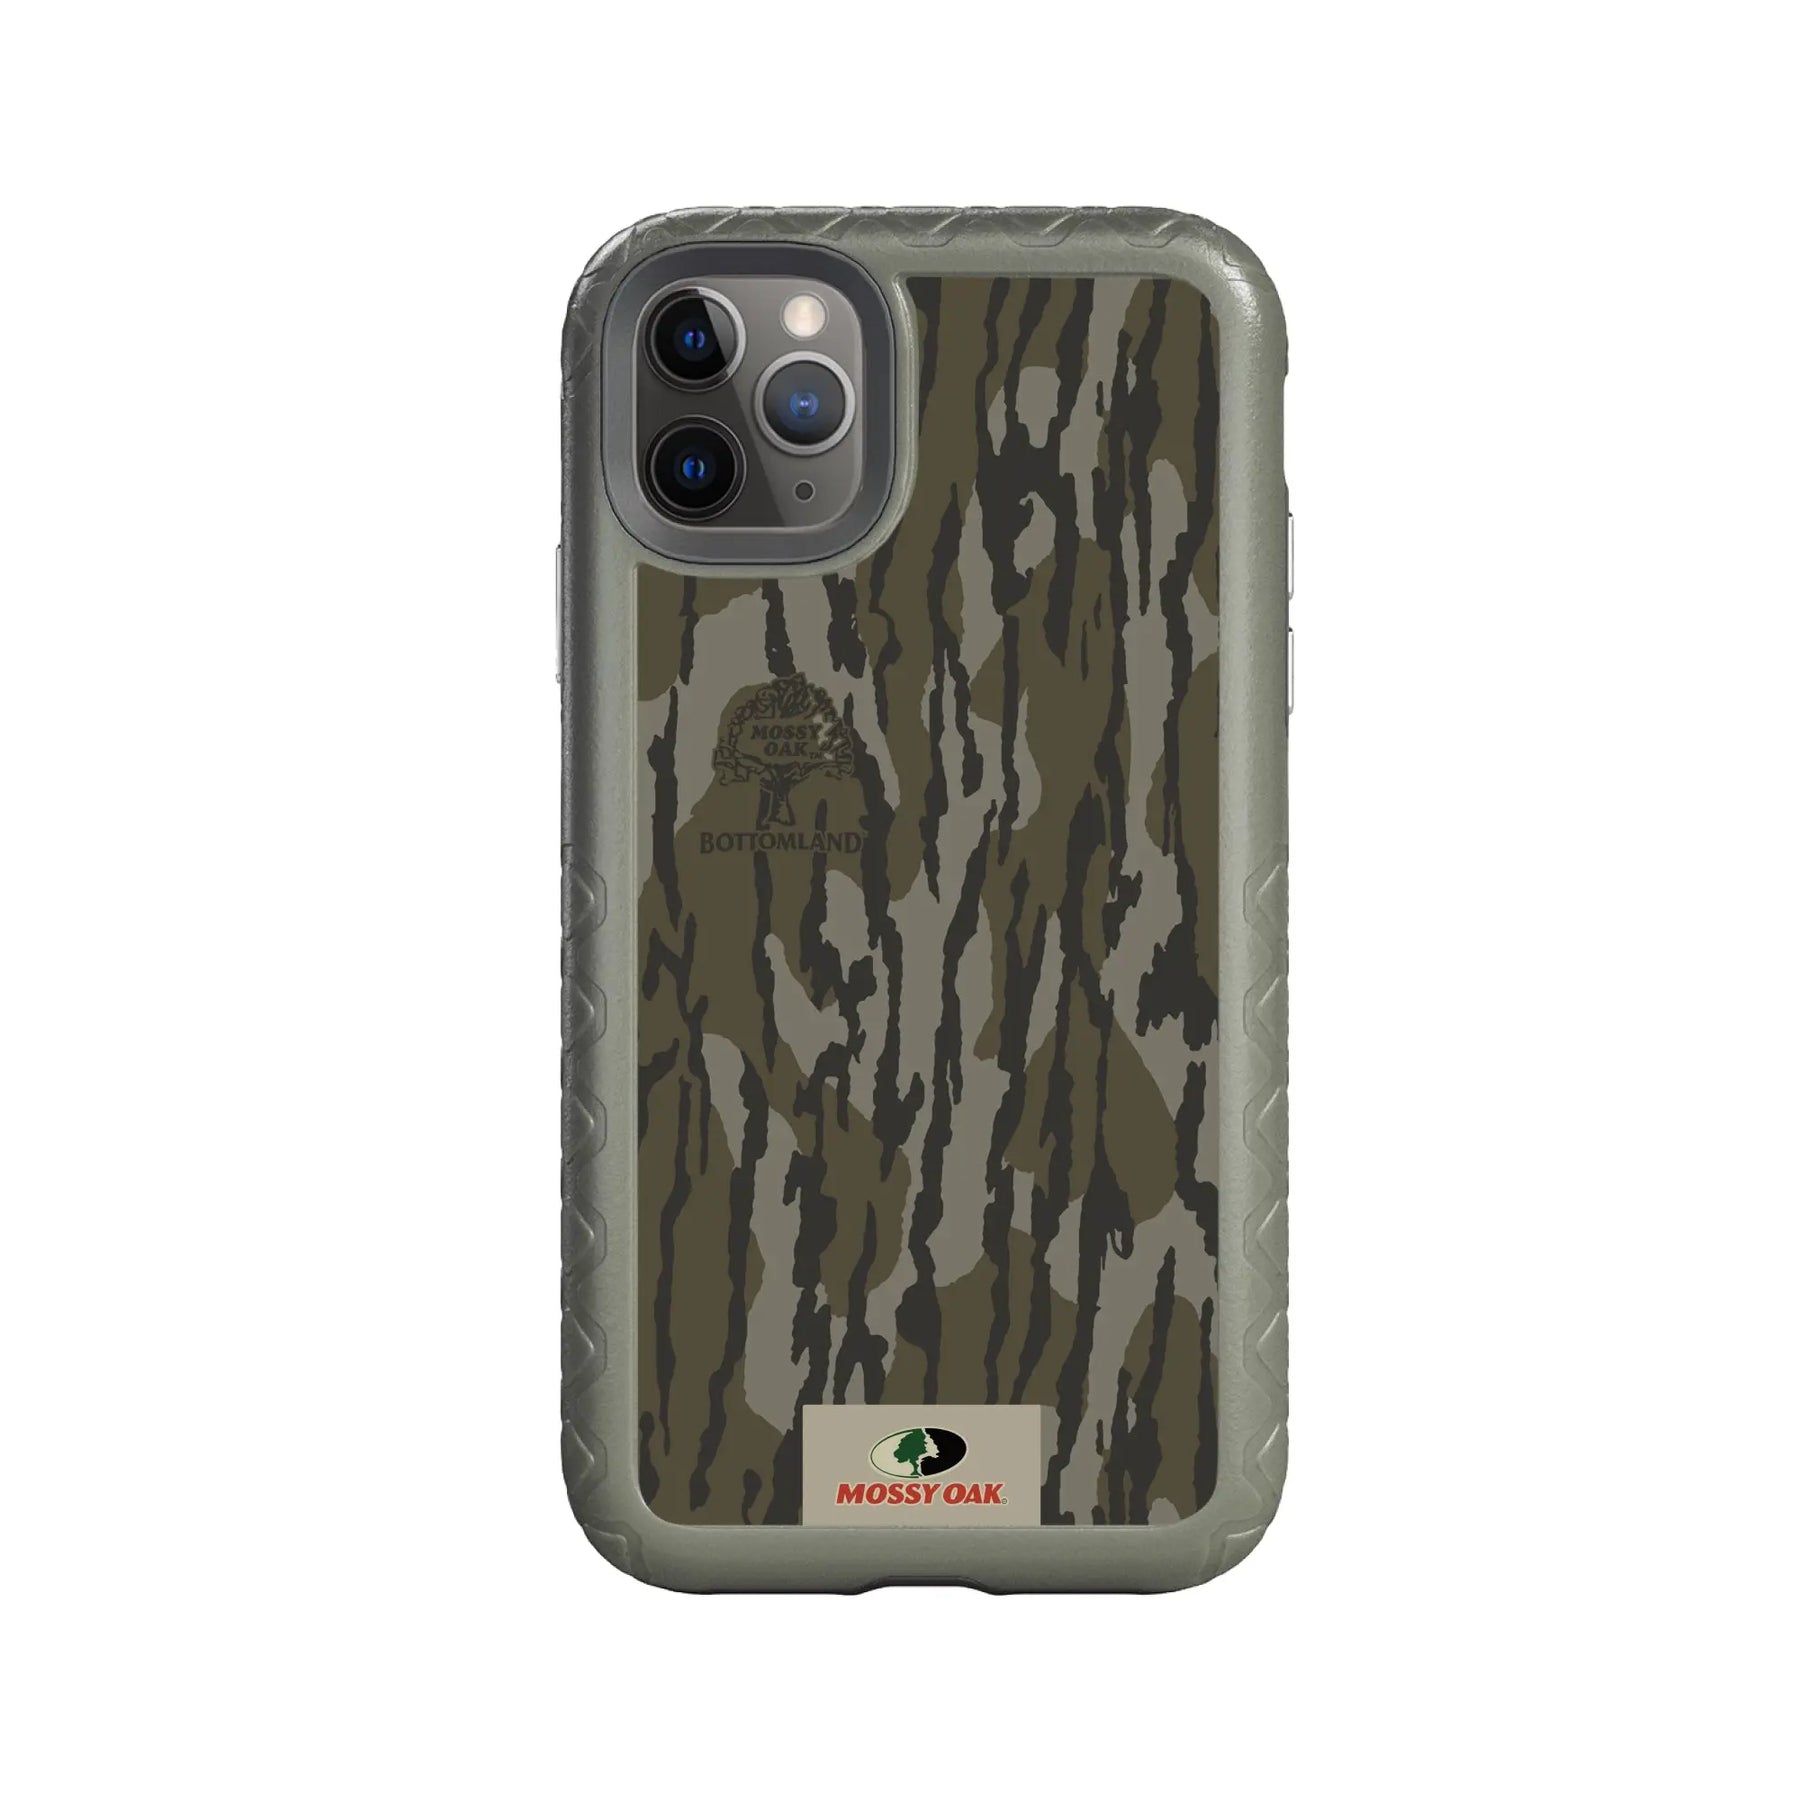 Mossy Oak Fortitude Series for Apple iPhone 11 Pro Max - Bottomland Orig - Custom Case - OliveDrabGreen - cellhelmet